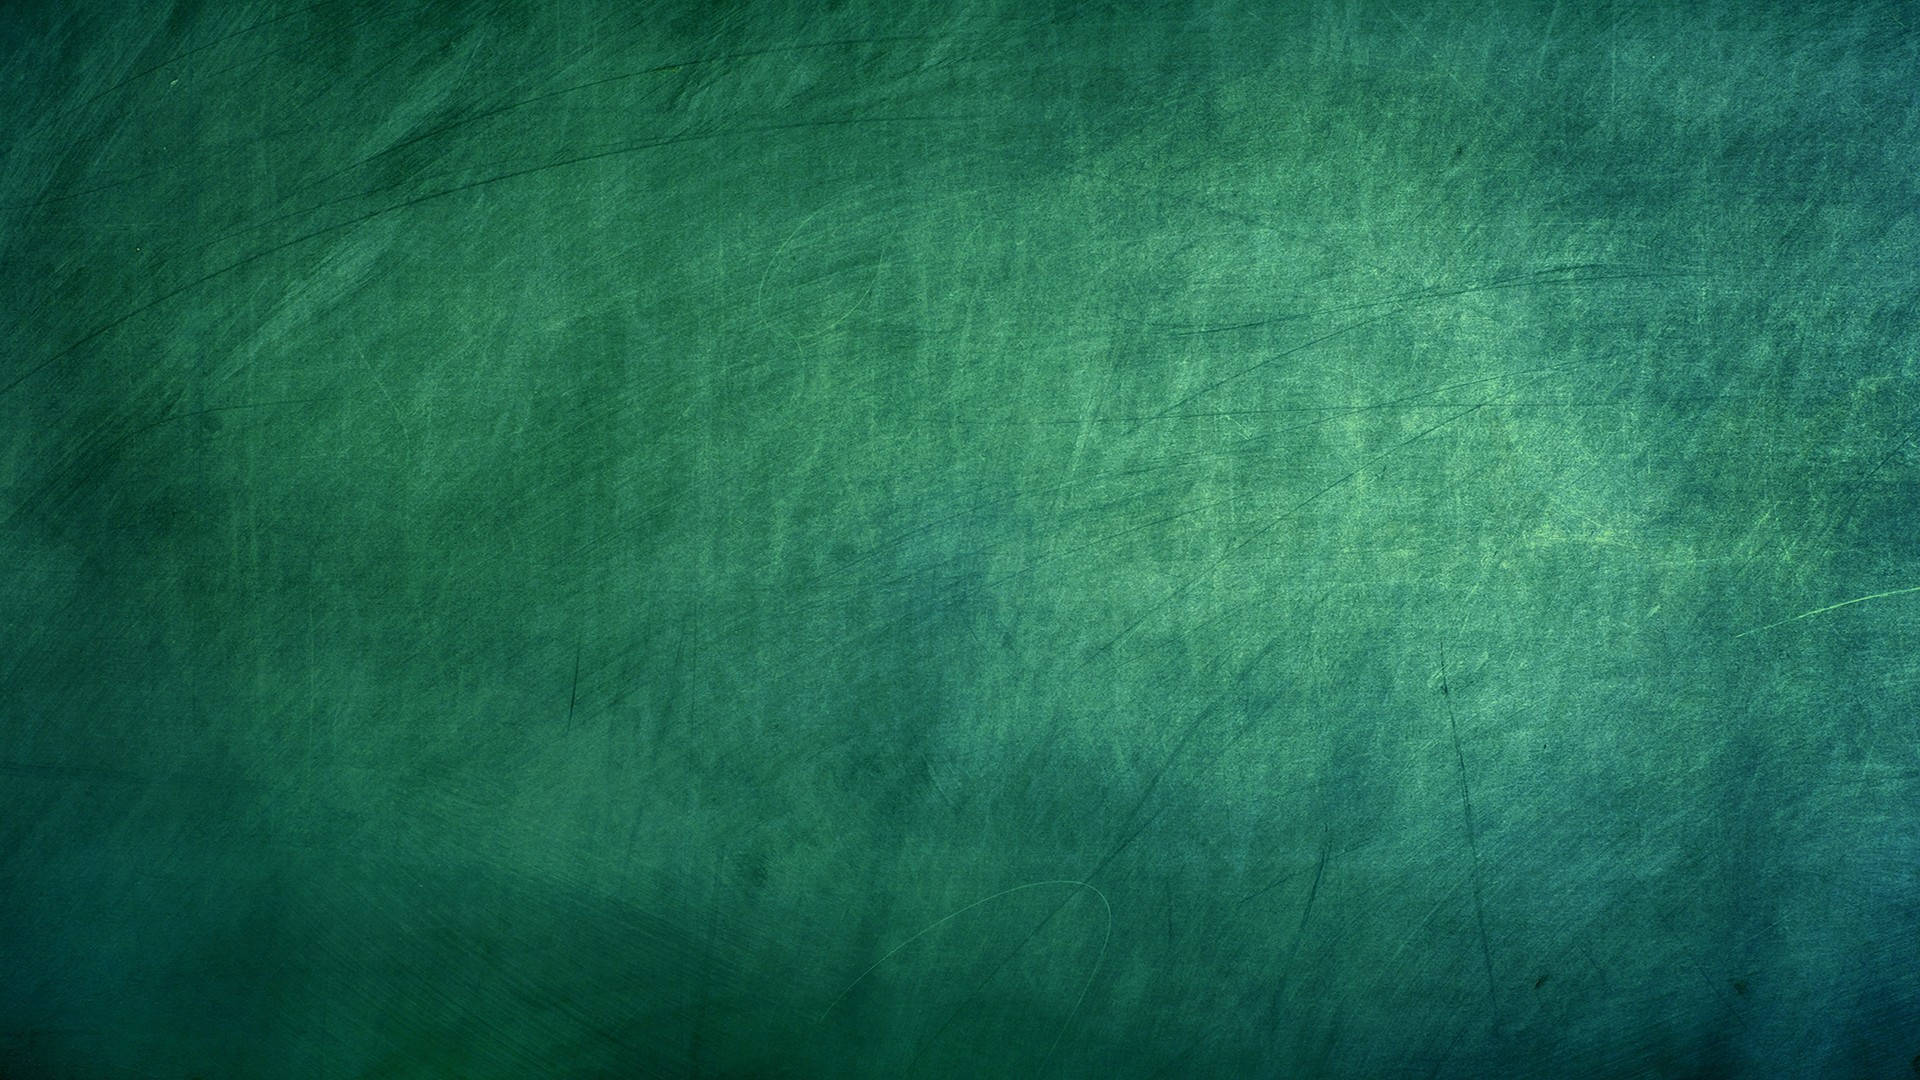 Beskidt Grøn Tavle Wallpaper